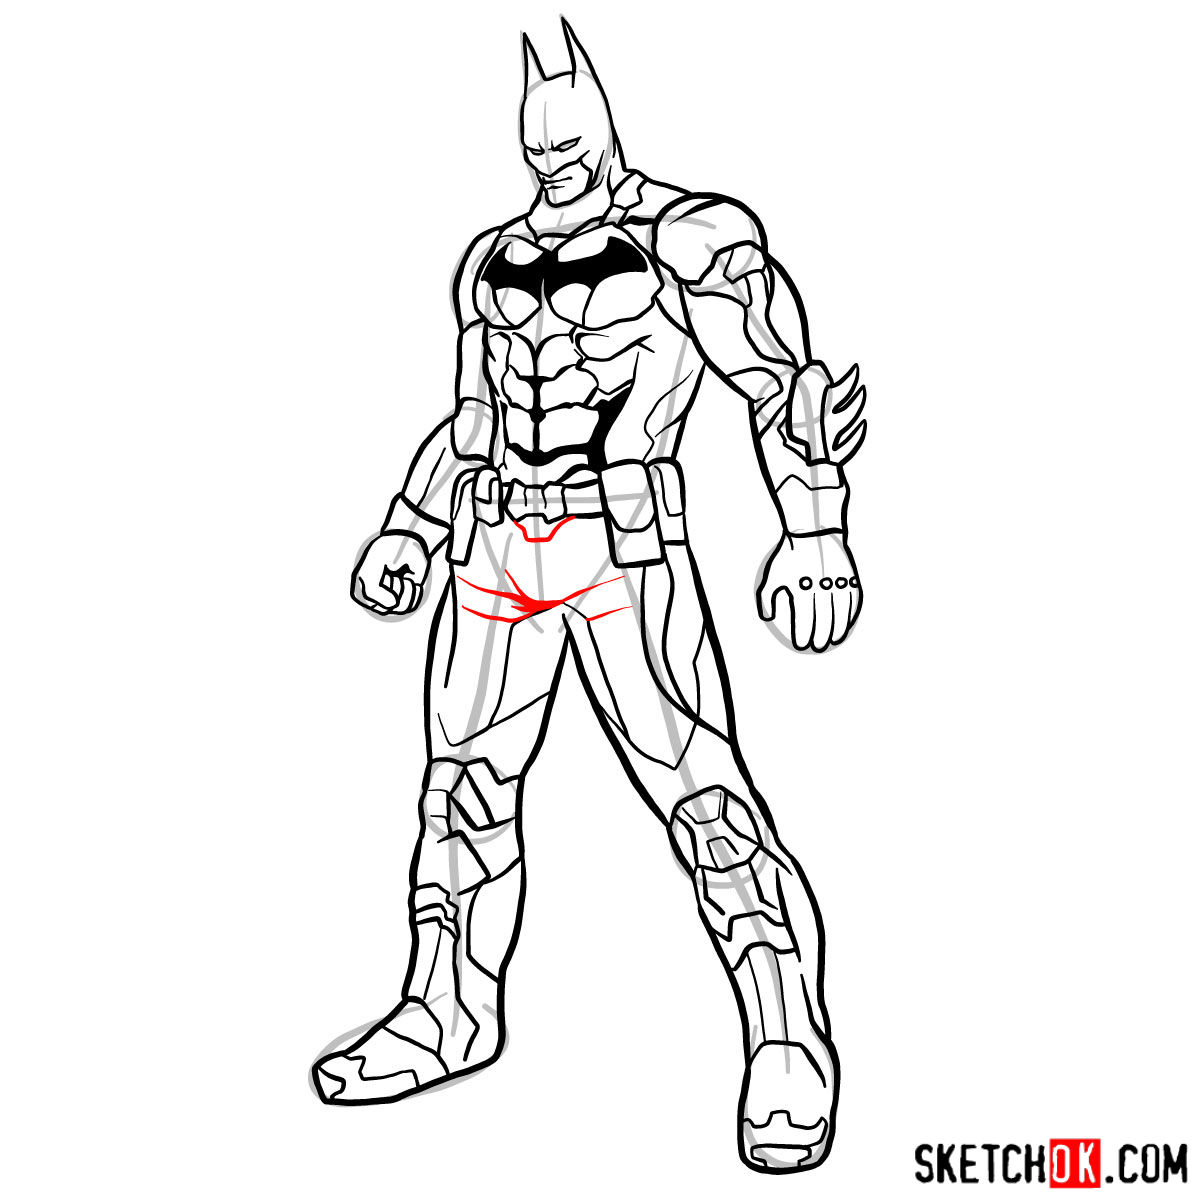 How to draw Batman the Dark Knight - step 14